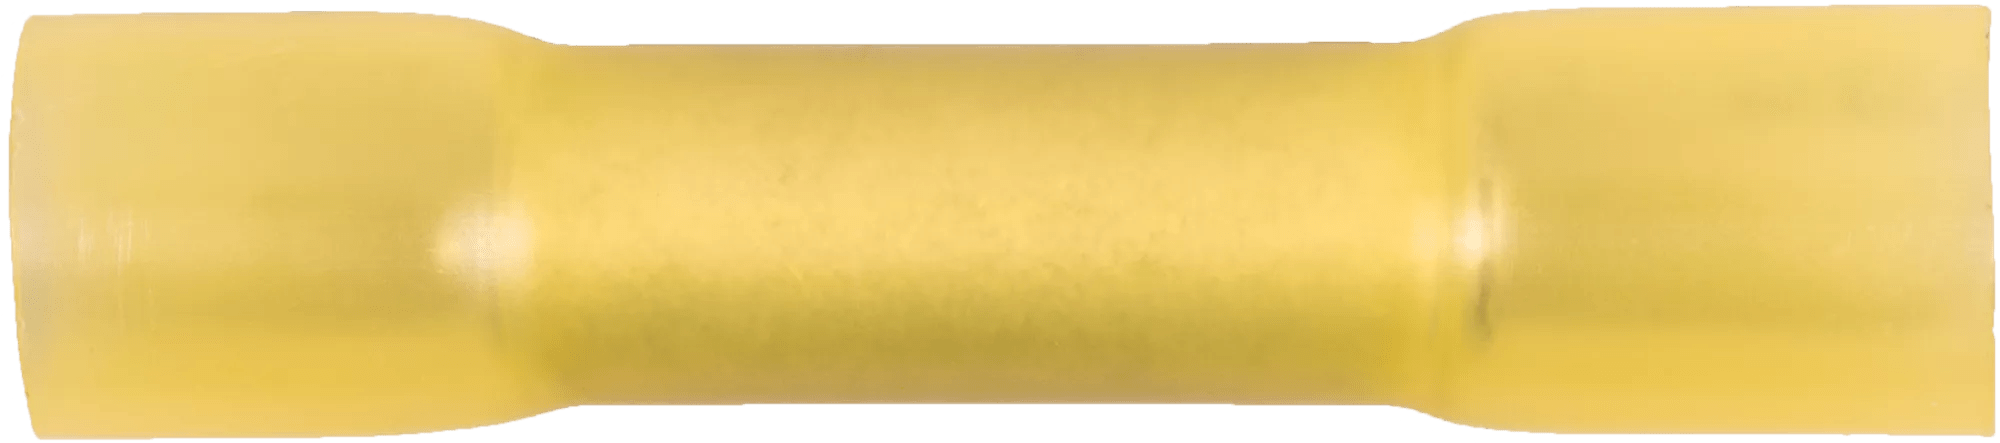 12 - 10 AWG Yellow Polyolefin Insulated Pro-Tech™ Commercial Grade Heat Shrink Butt Connector - Medium